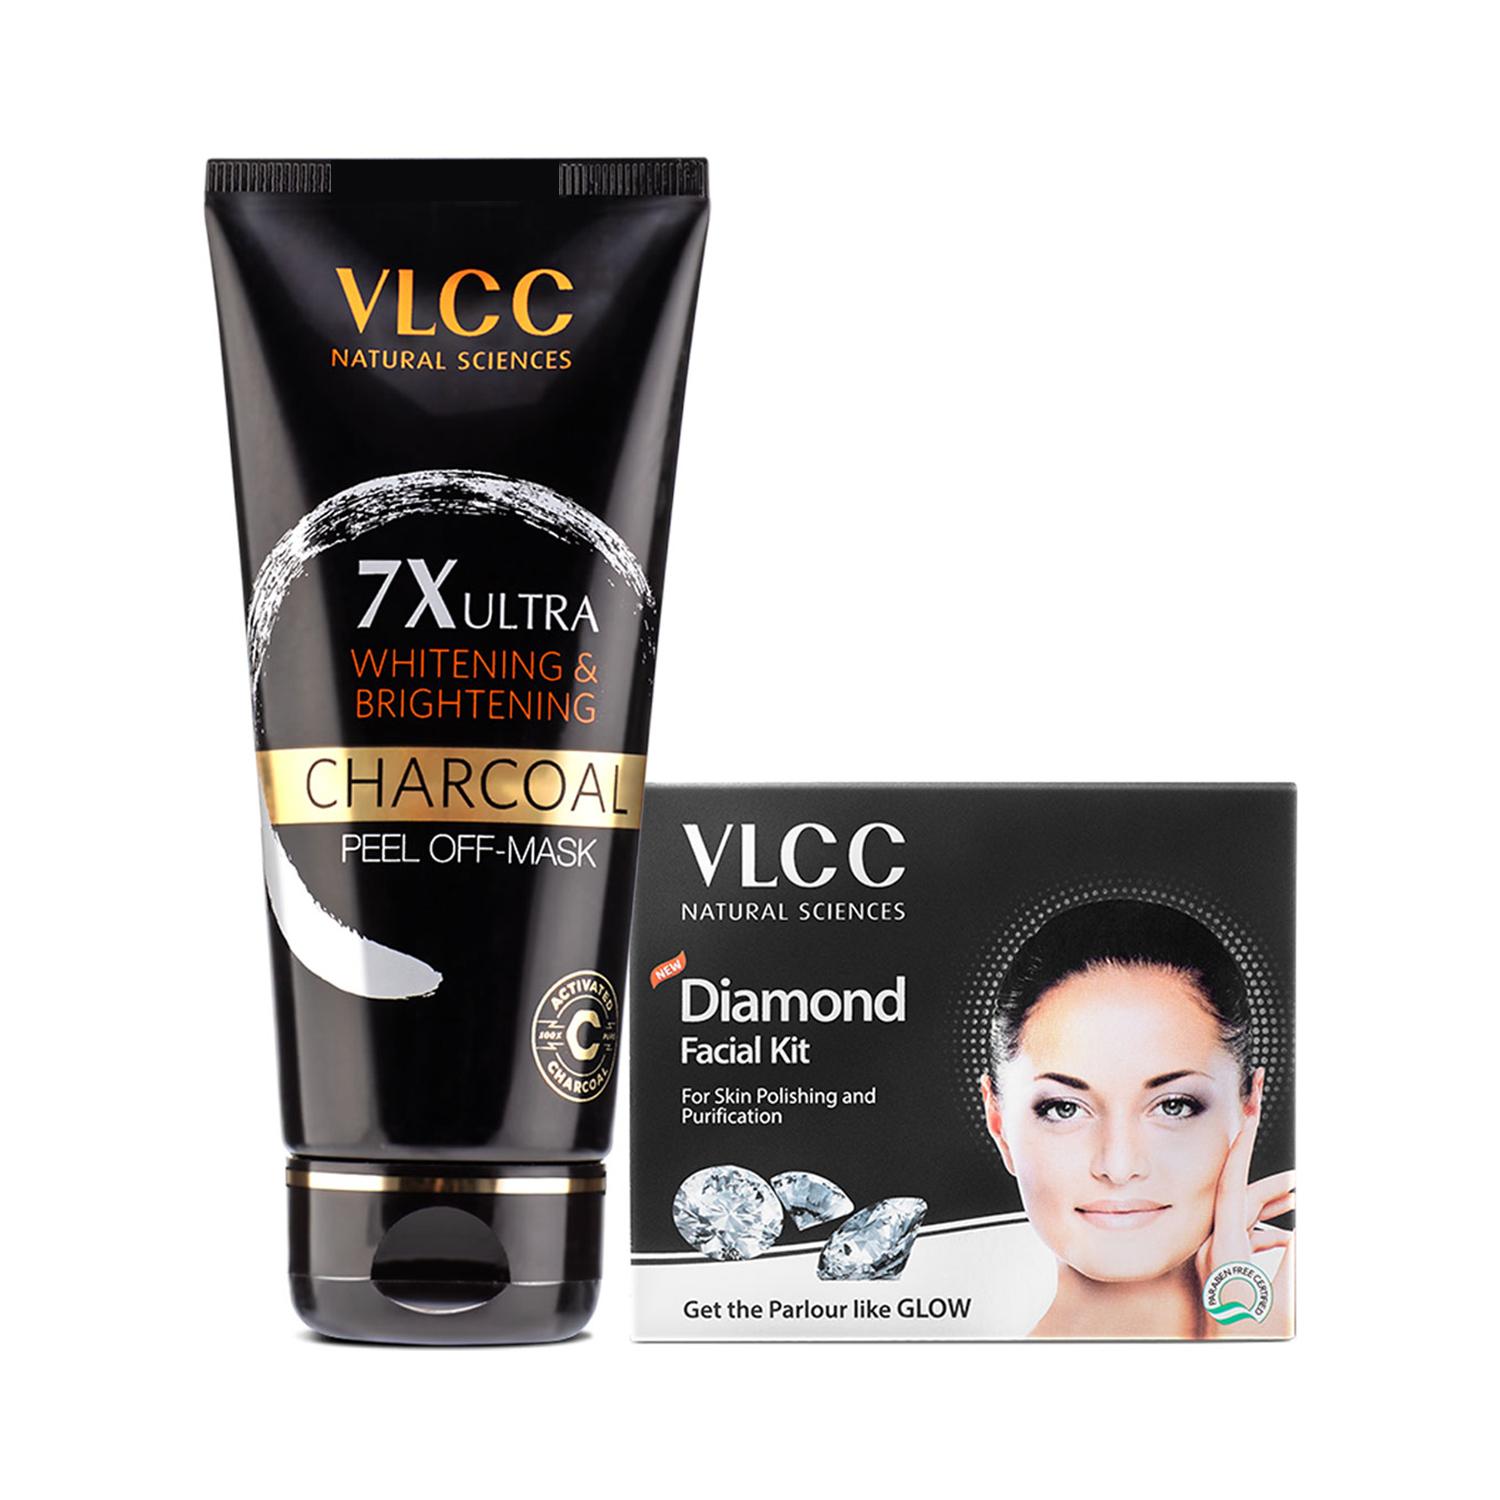 VLCC | VLCC 7X Ultra Whitening and Brightening Charcoal Peel Off Mask & Diamond Facial Kit